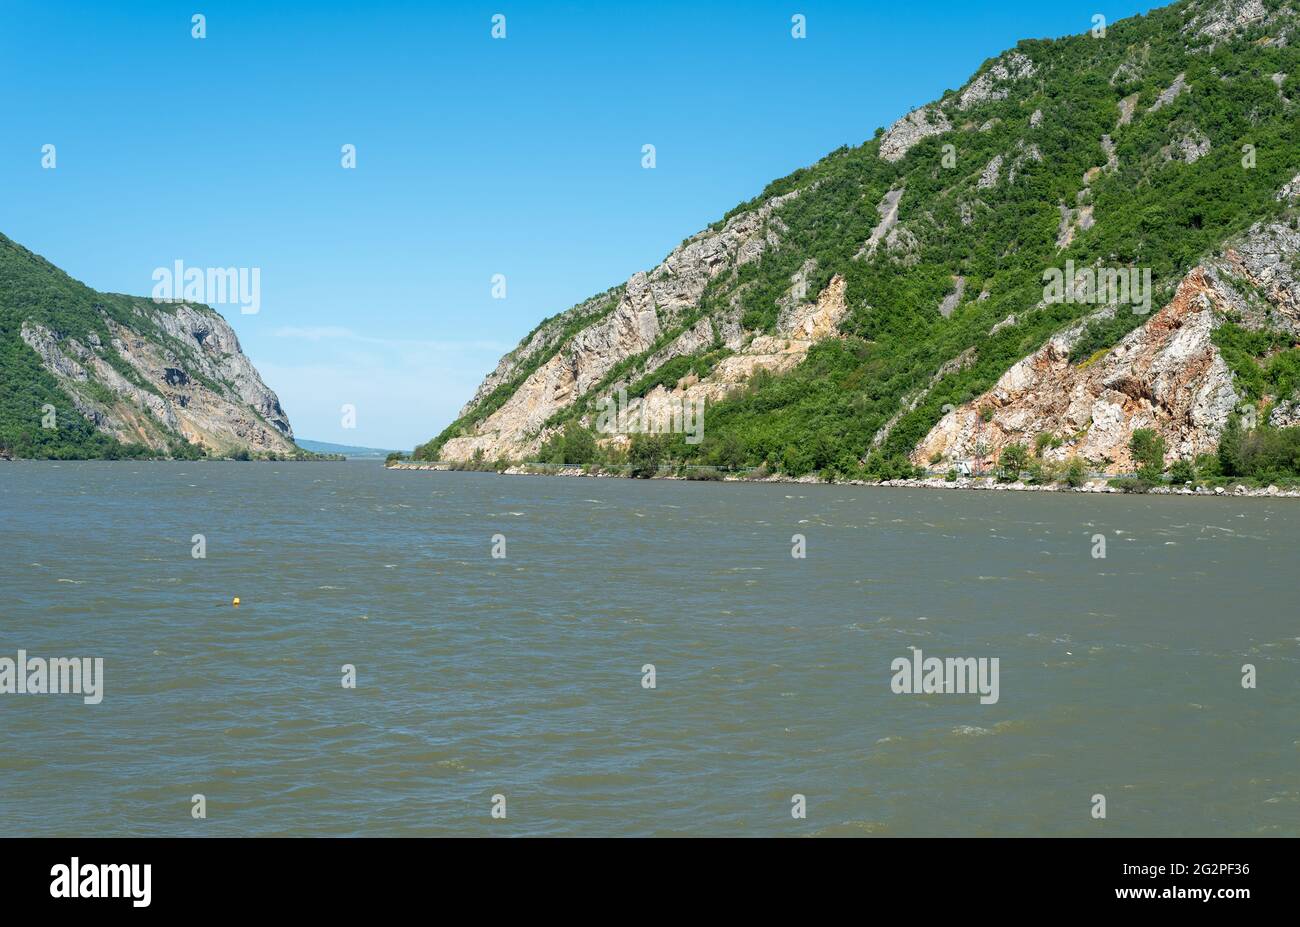 Danube river at the Iron gates Djerdapska klisura gorge between Serbia and Romania Stock Photo